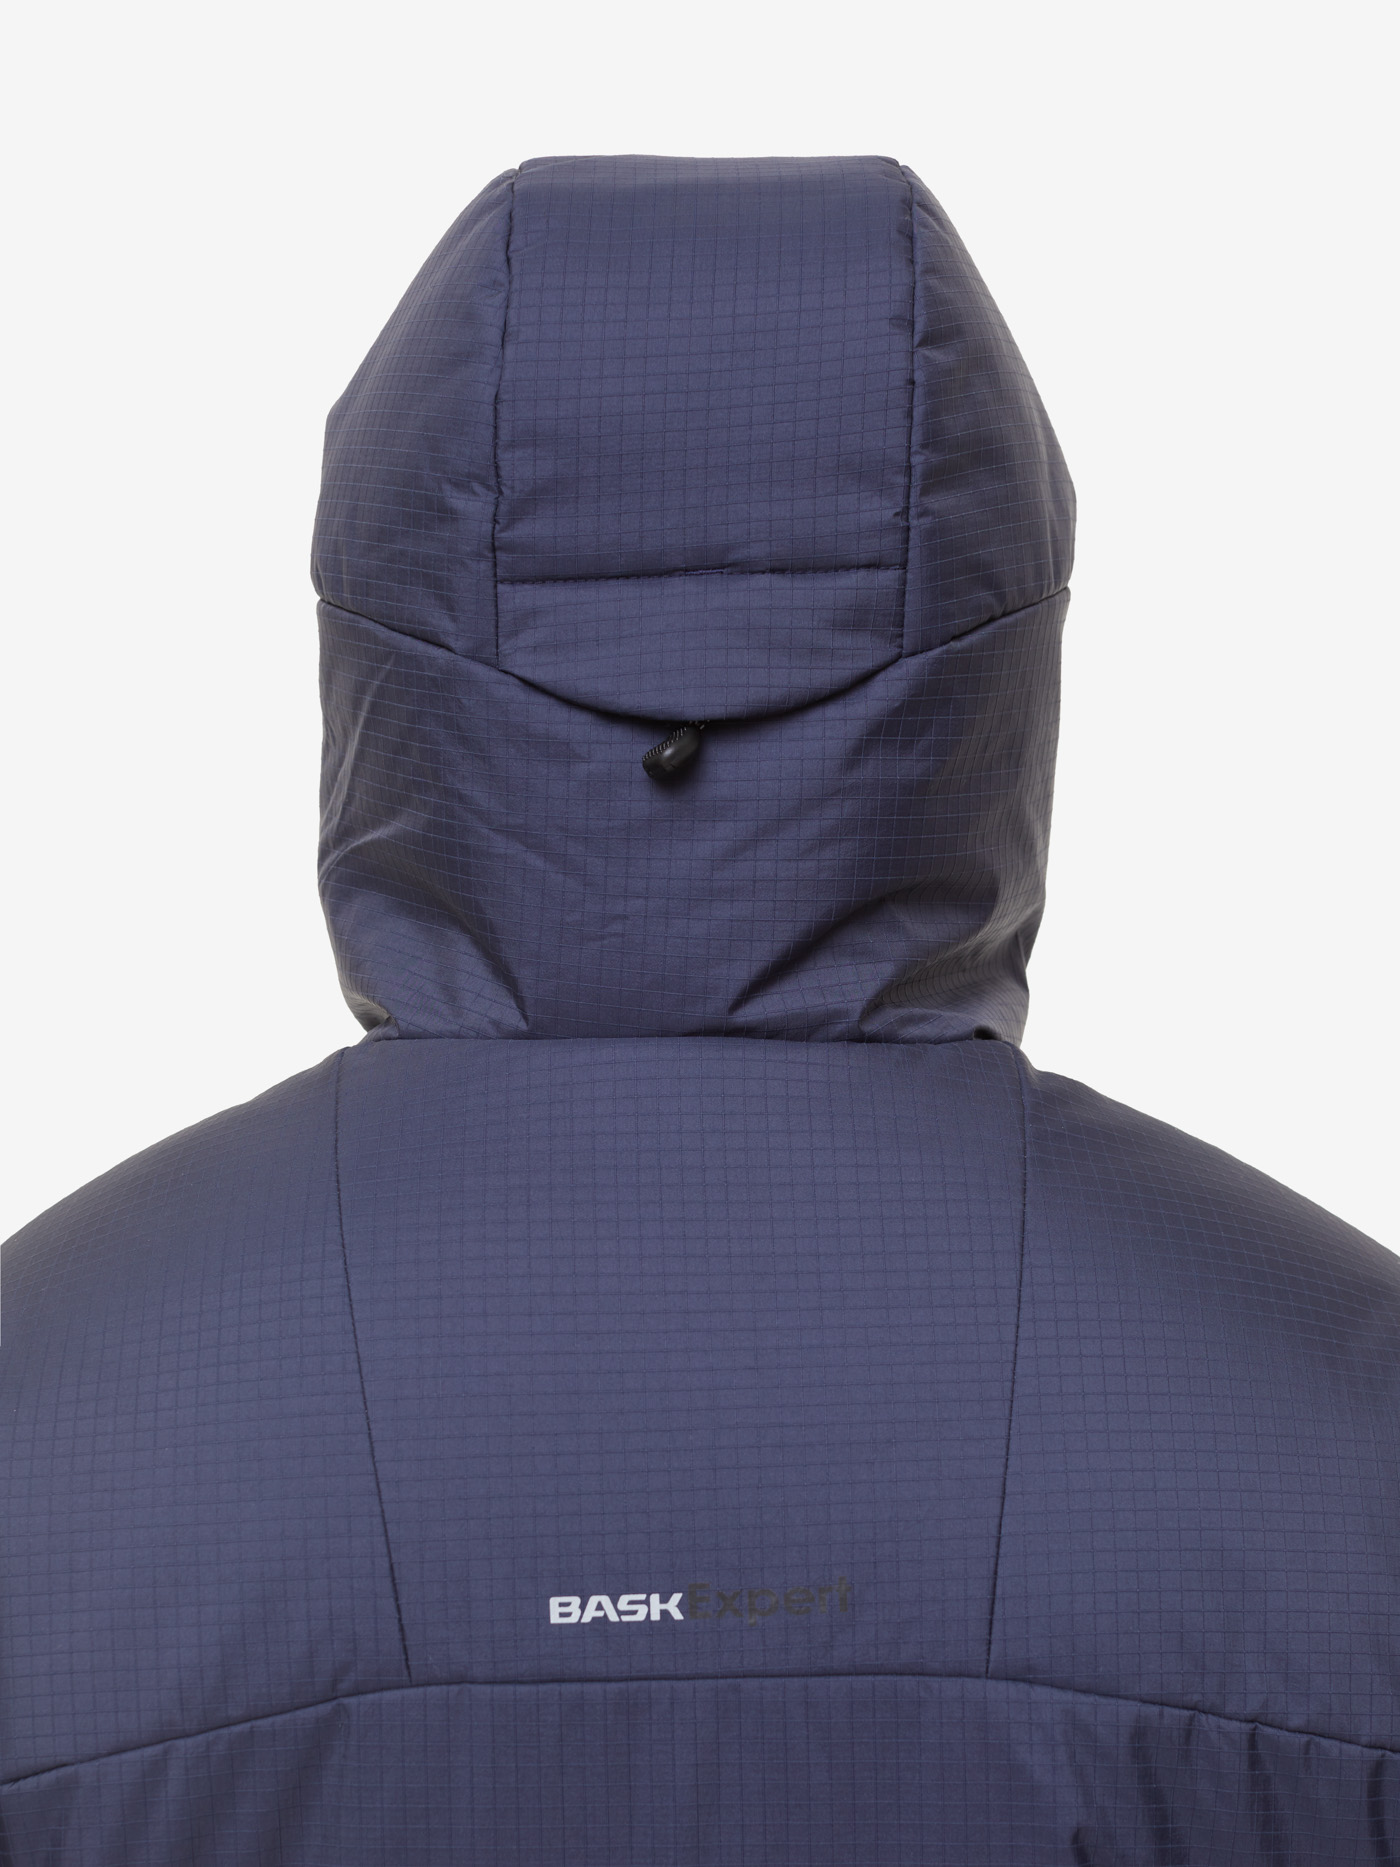 Куртка BASK, размер 46, цвет синий тмн 19270-9376-046 Solution - фото 11